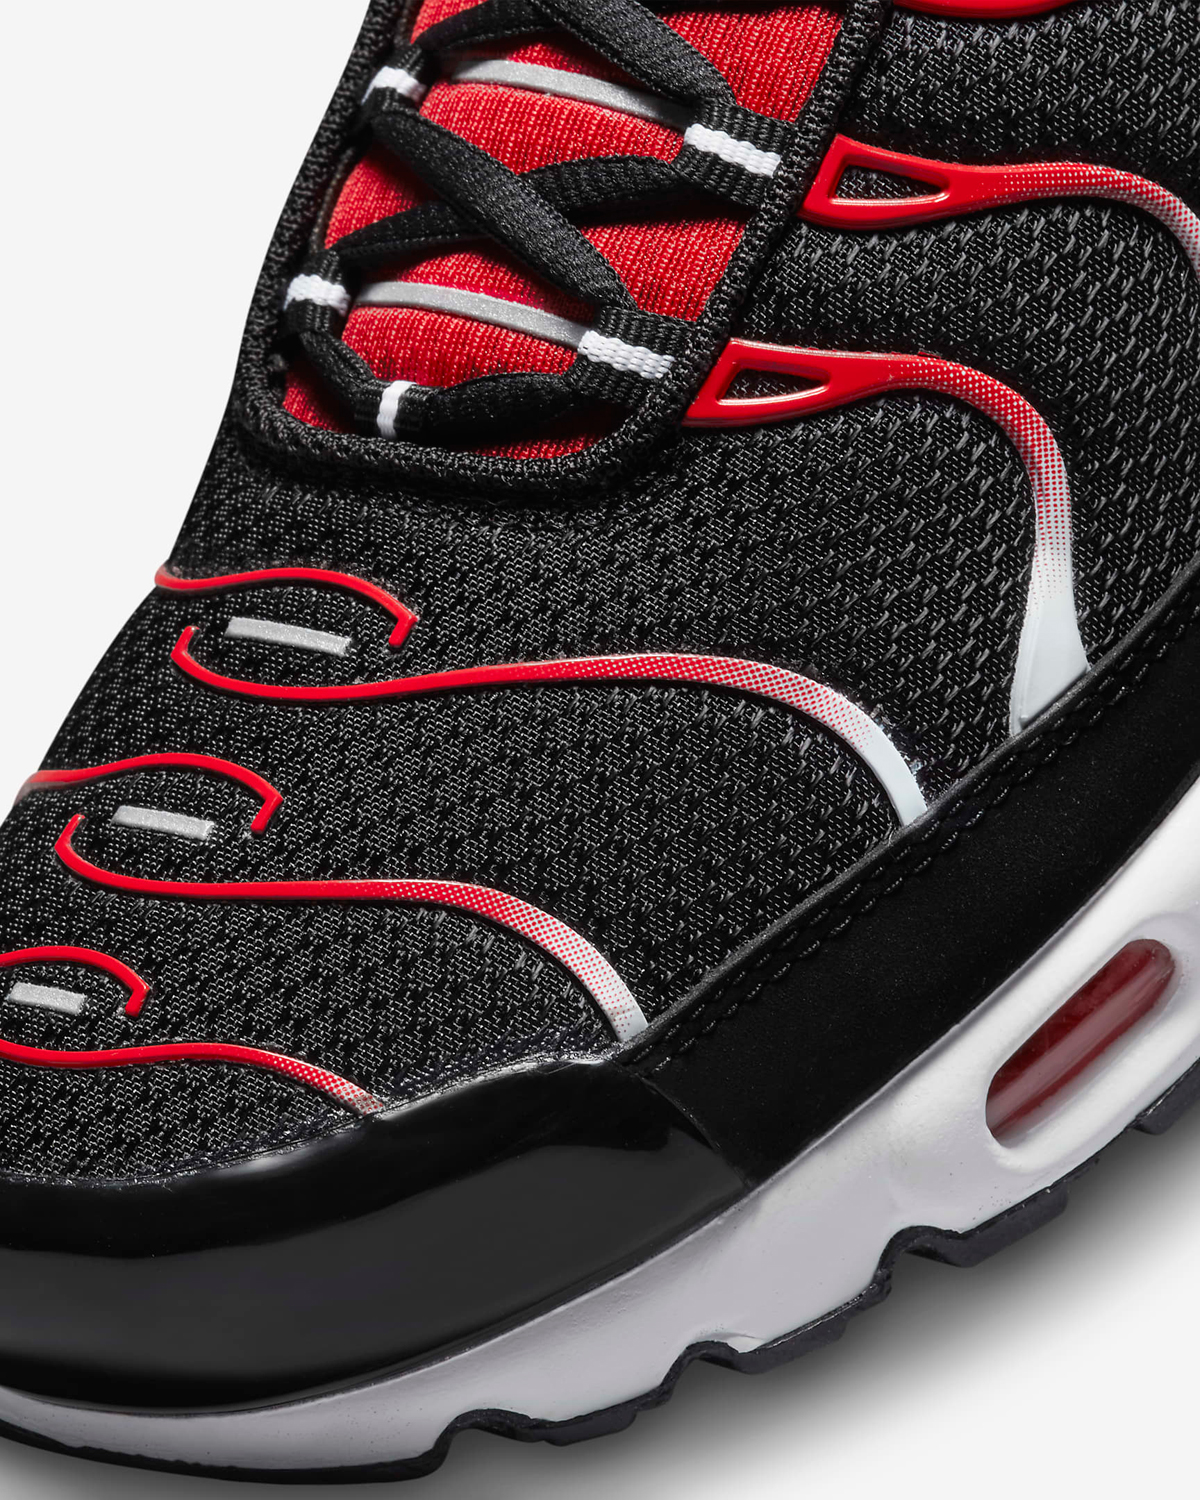 Nike-Air-Max-Plus-Black-White-University-Red-DM0032-004-Release-Date-Info-7